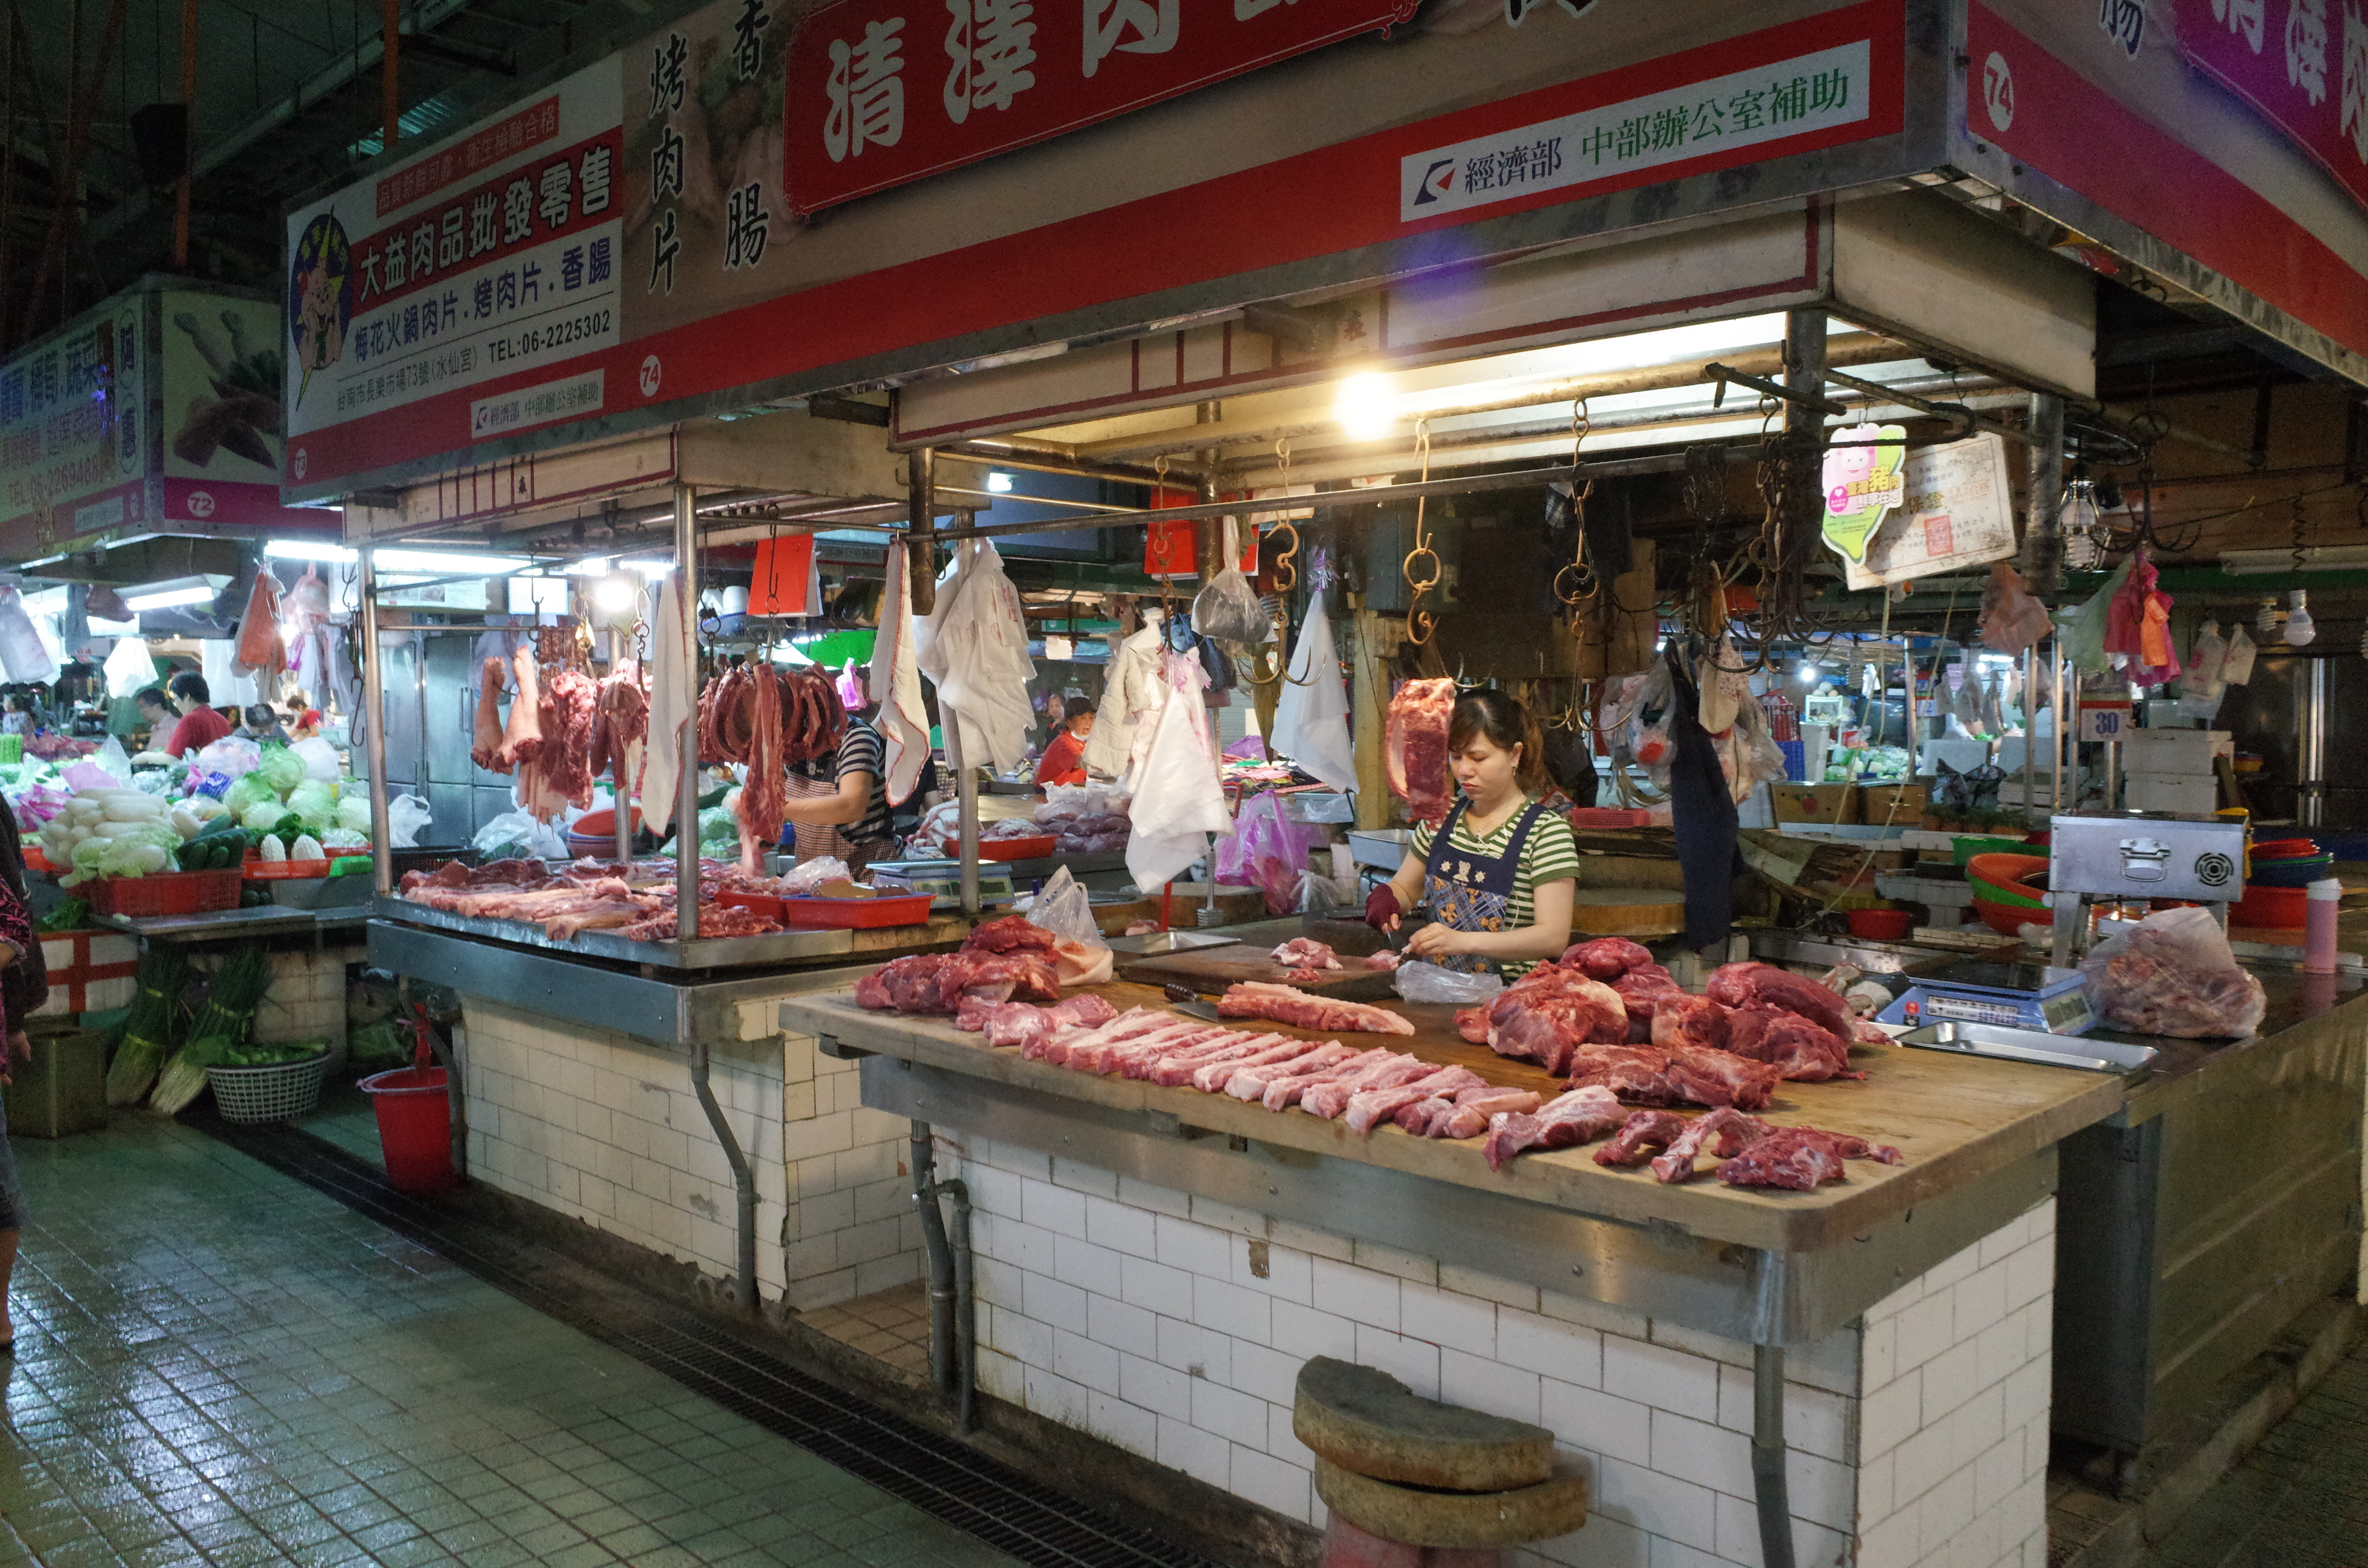 File:Chinese butcher.jpg - Wikipedia